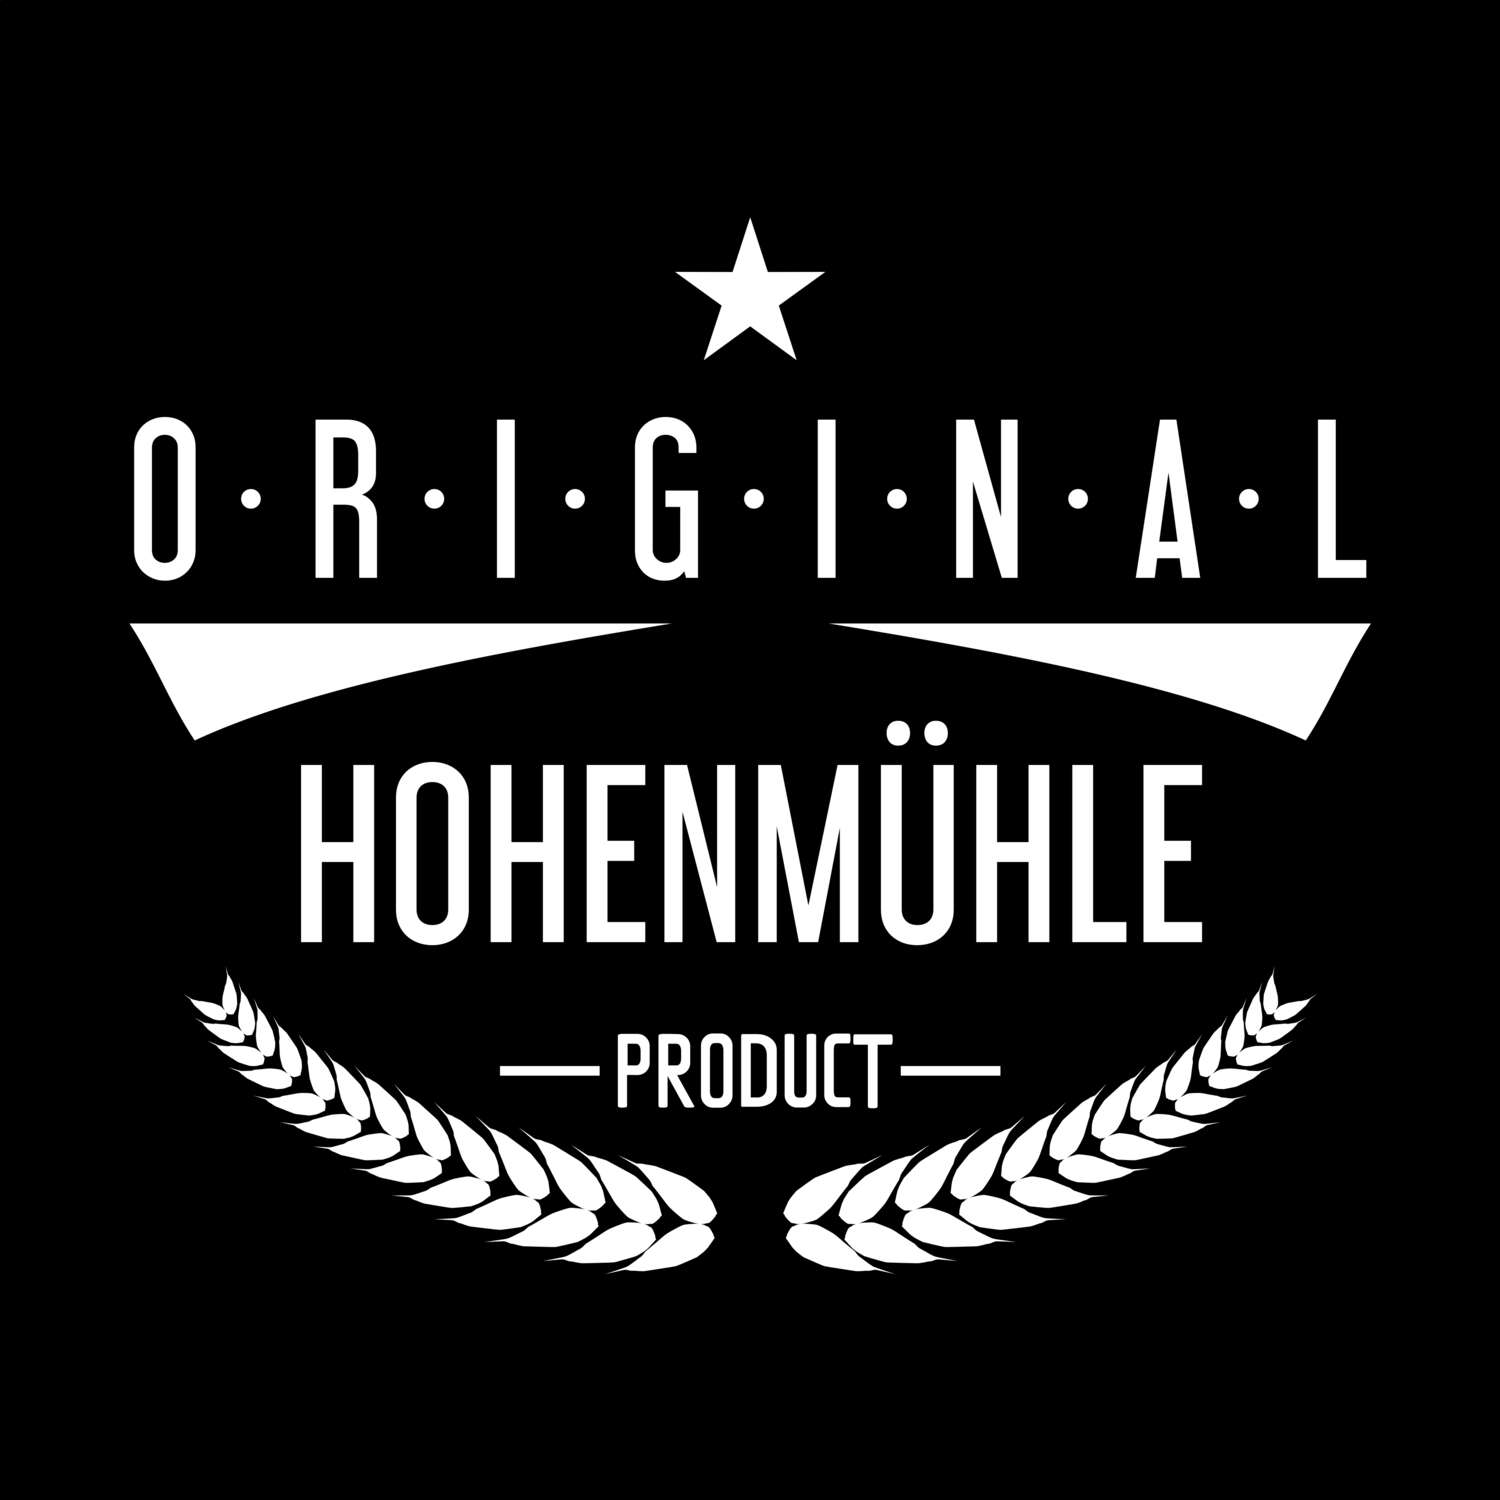 Hohenmühle T-Shirt »Original Product«